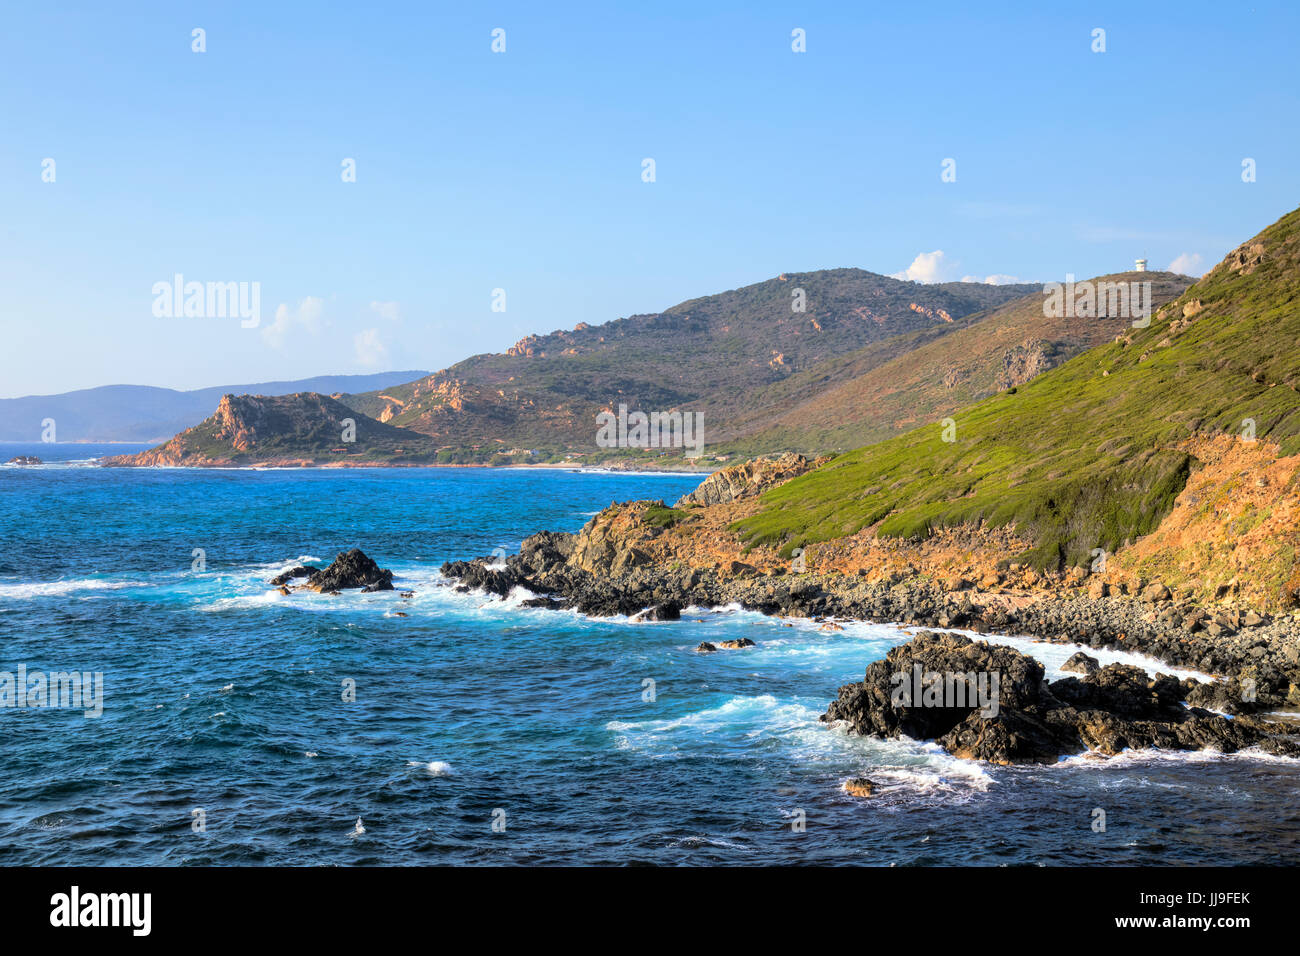 Pointe de la Parata, Iles Sanguinaires, Ajaccio, Corsica, France Stock Photo